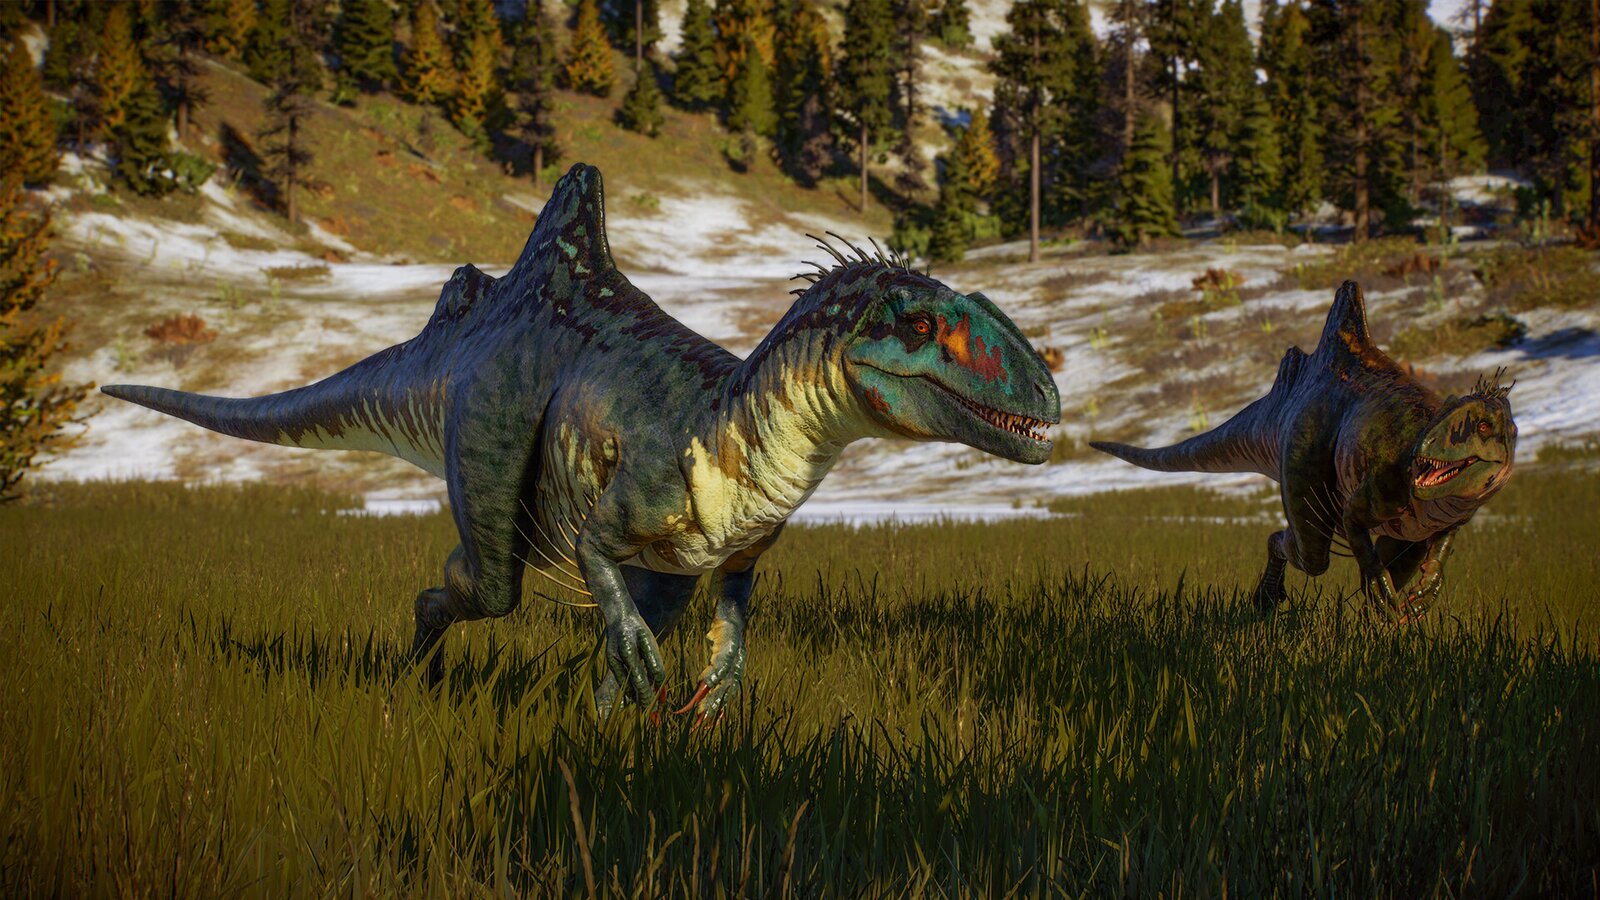 Jurassic World Evolution 2 - Cretaceous Predator Pack